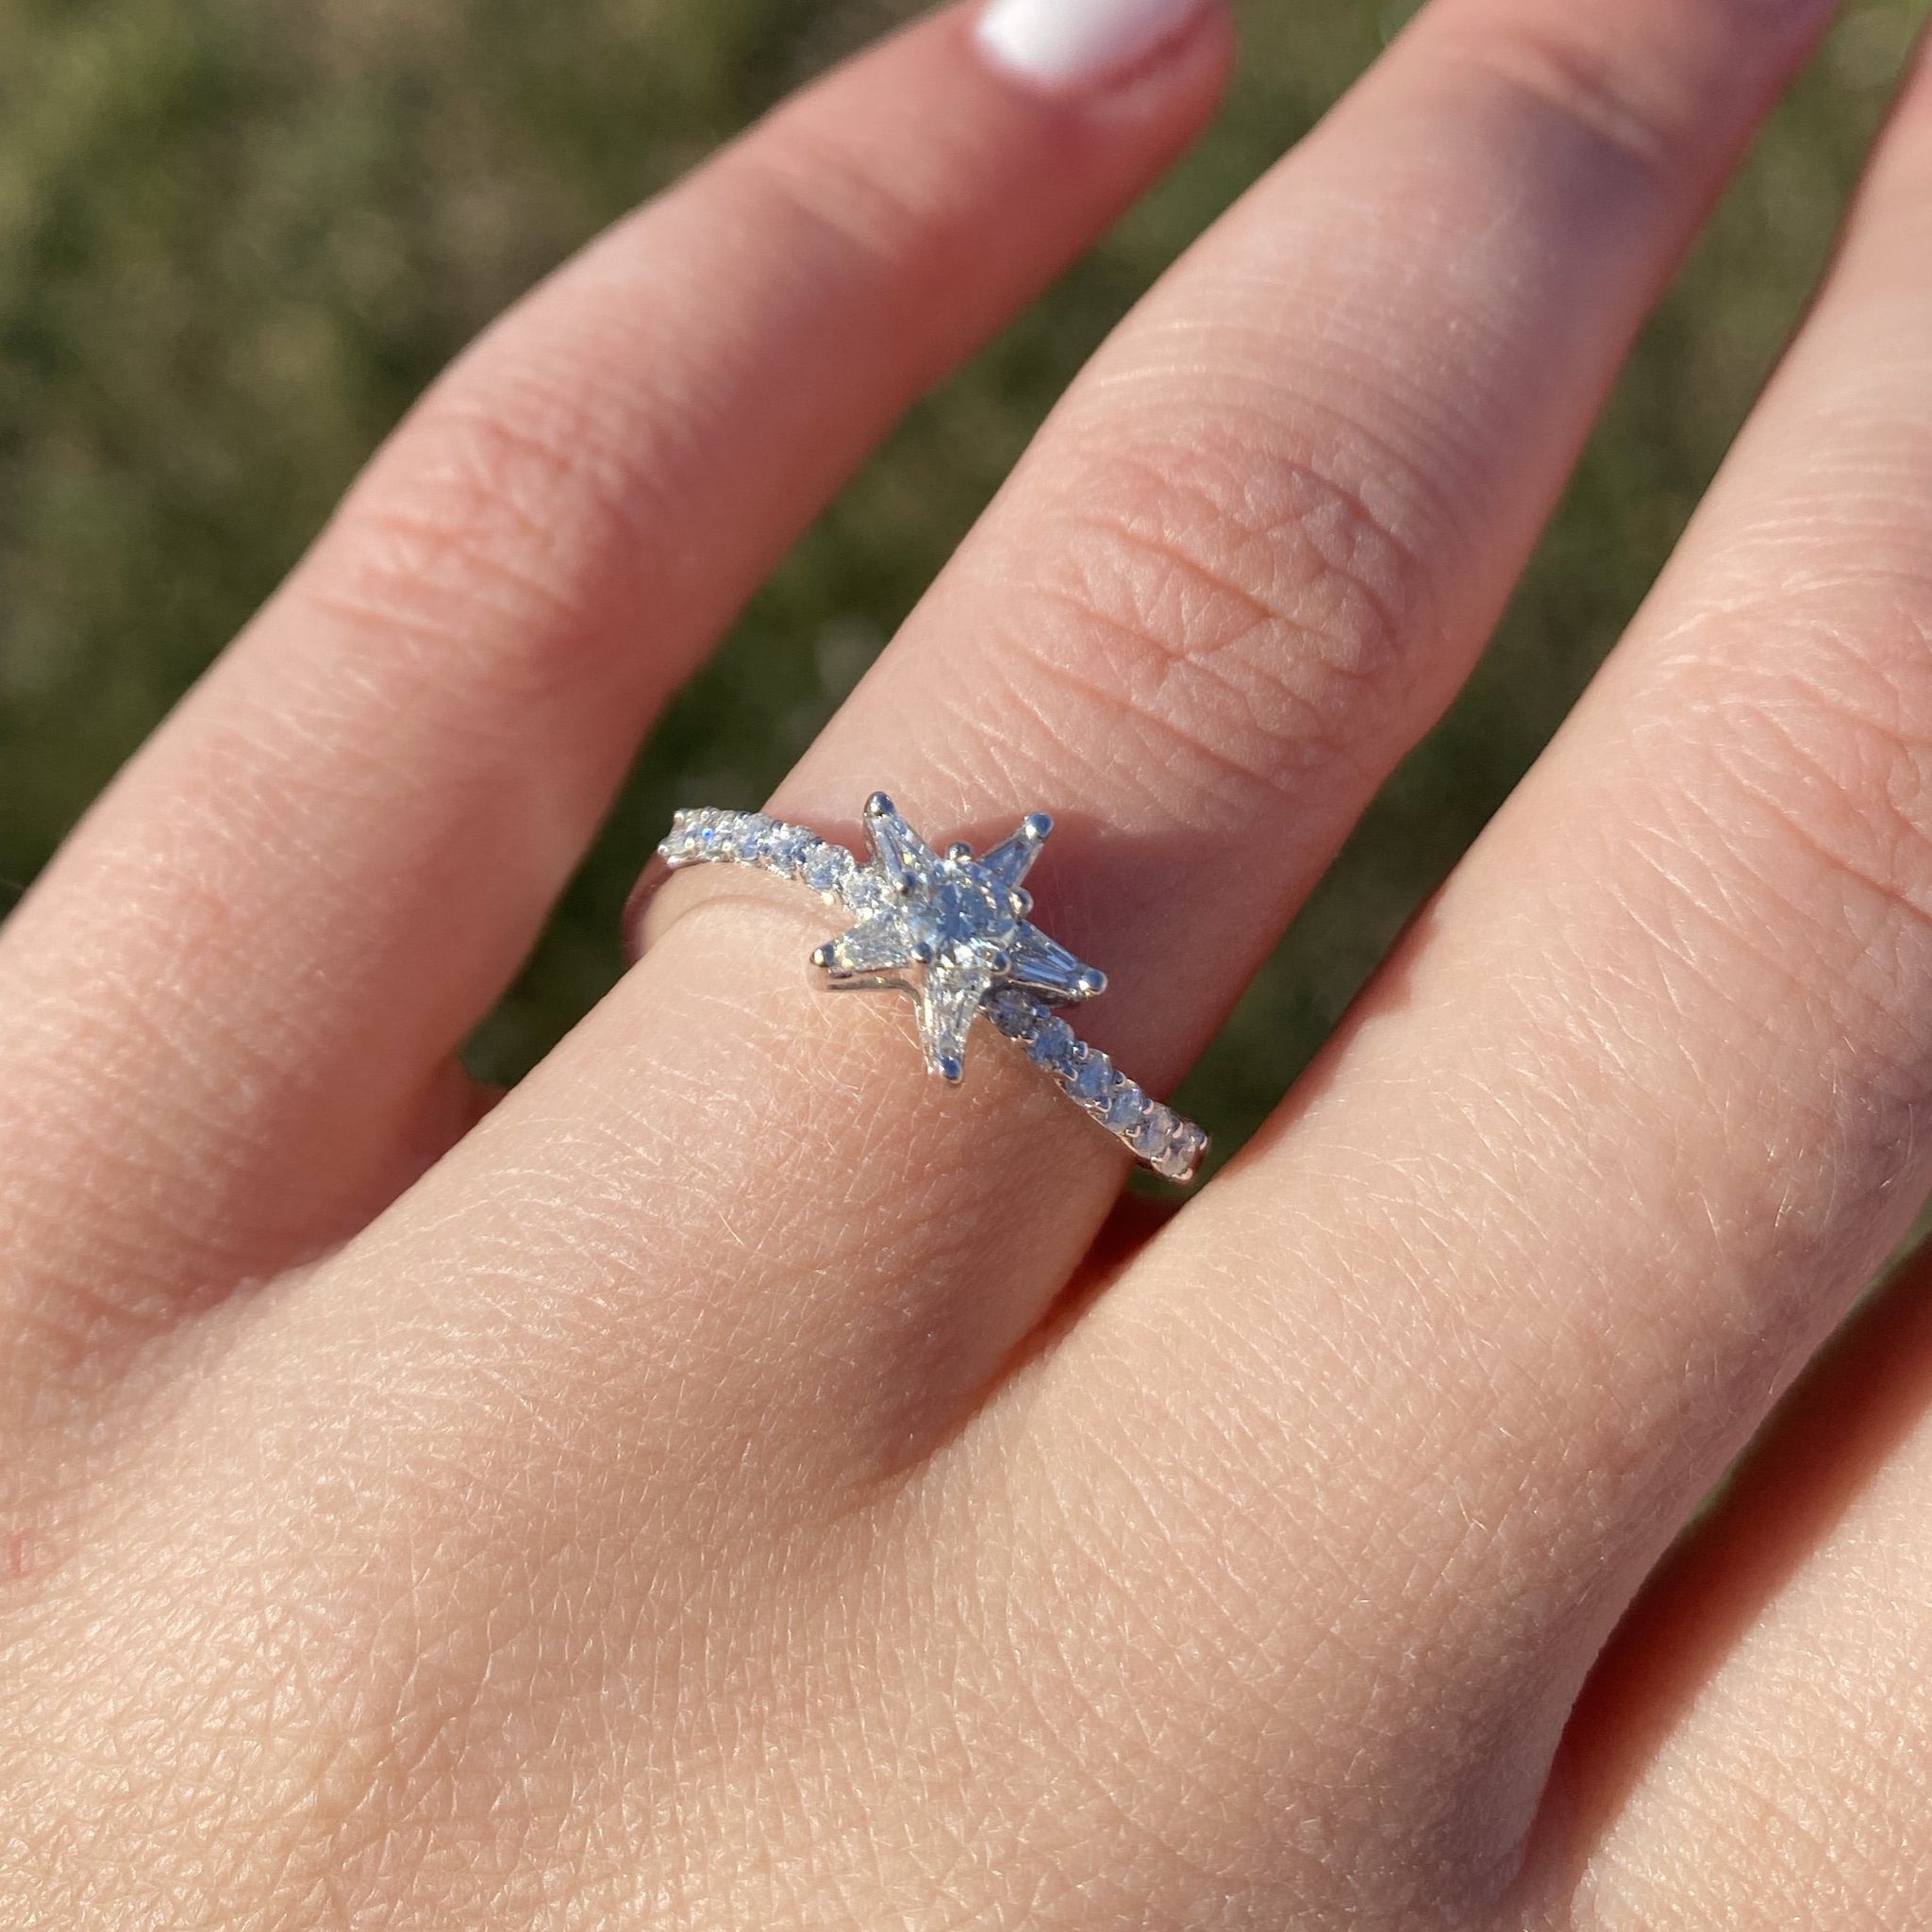 Star Engagement Ring